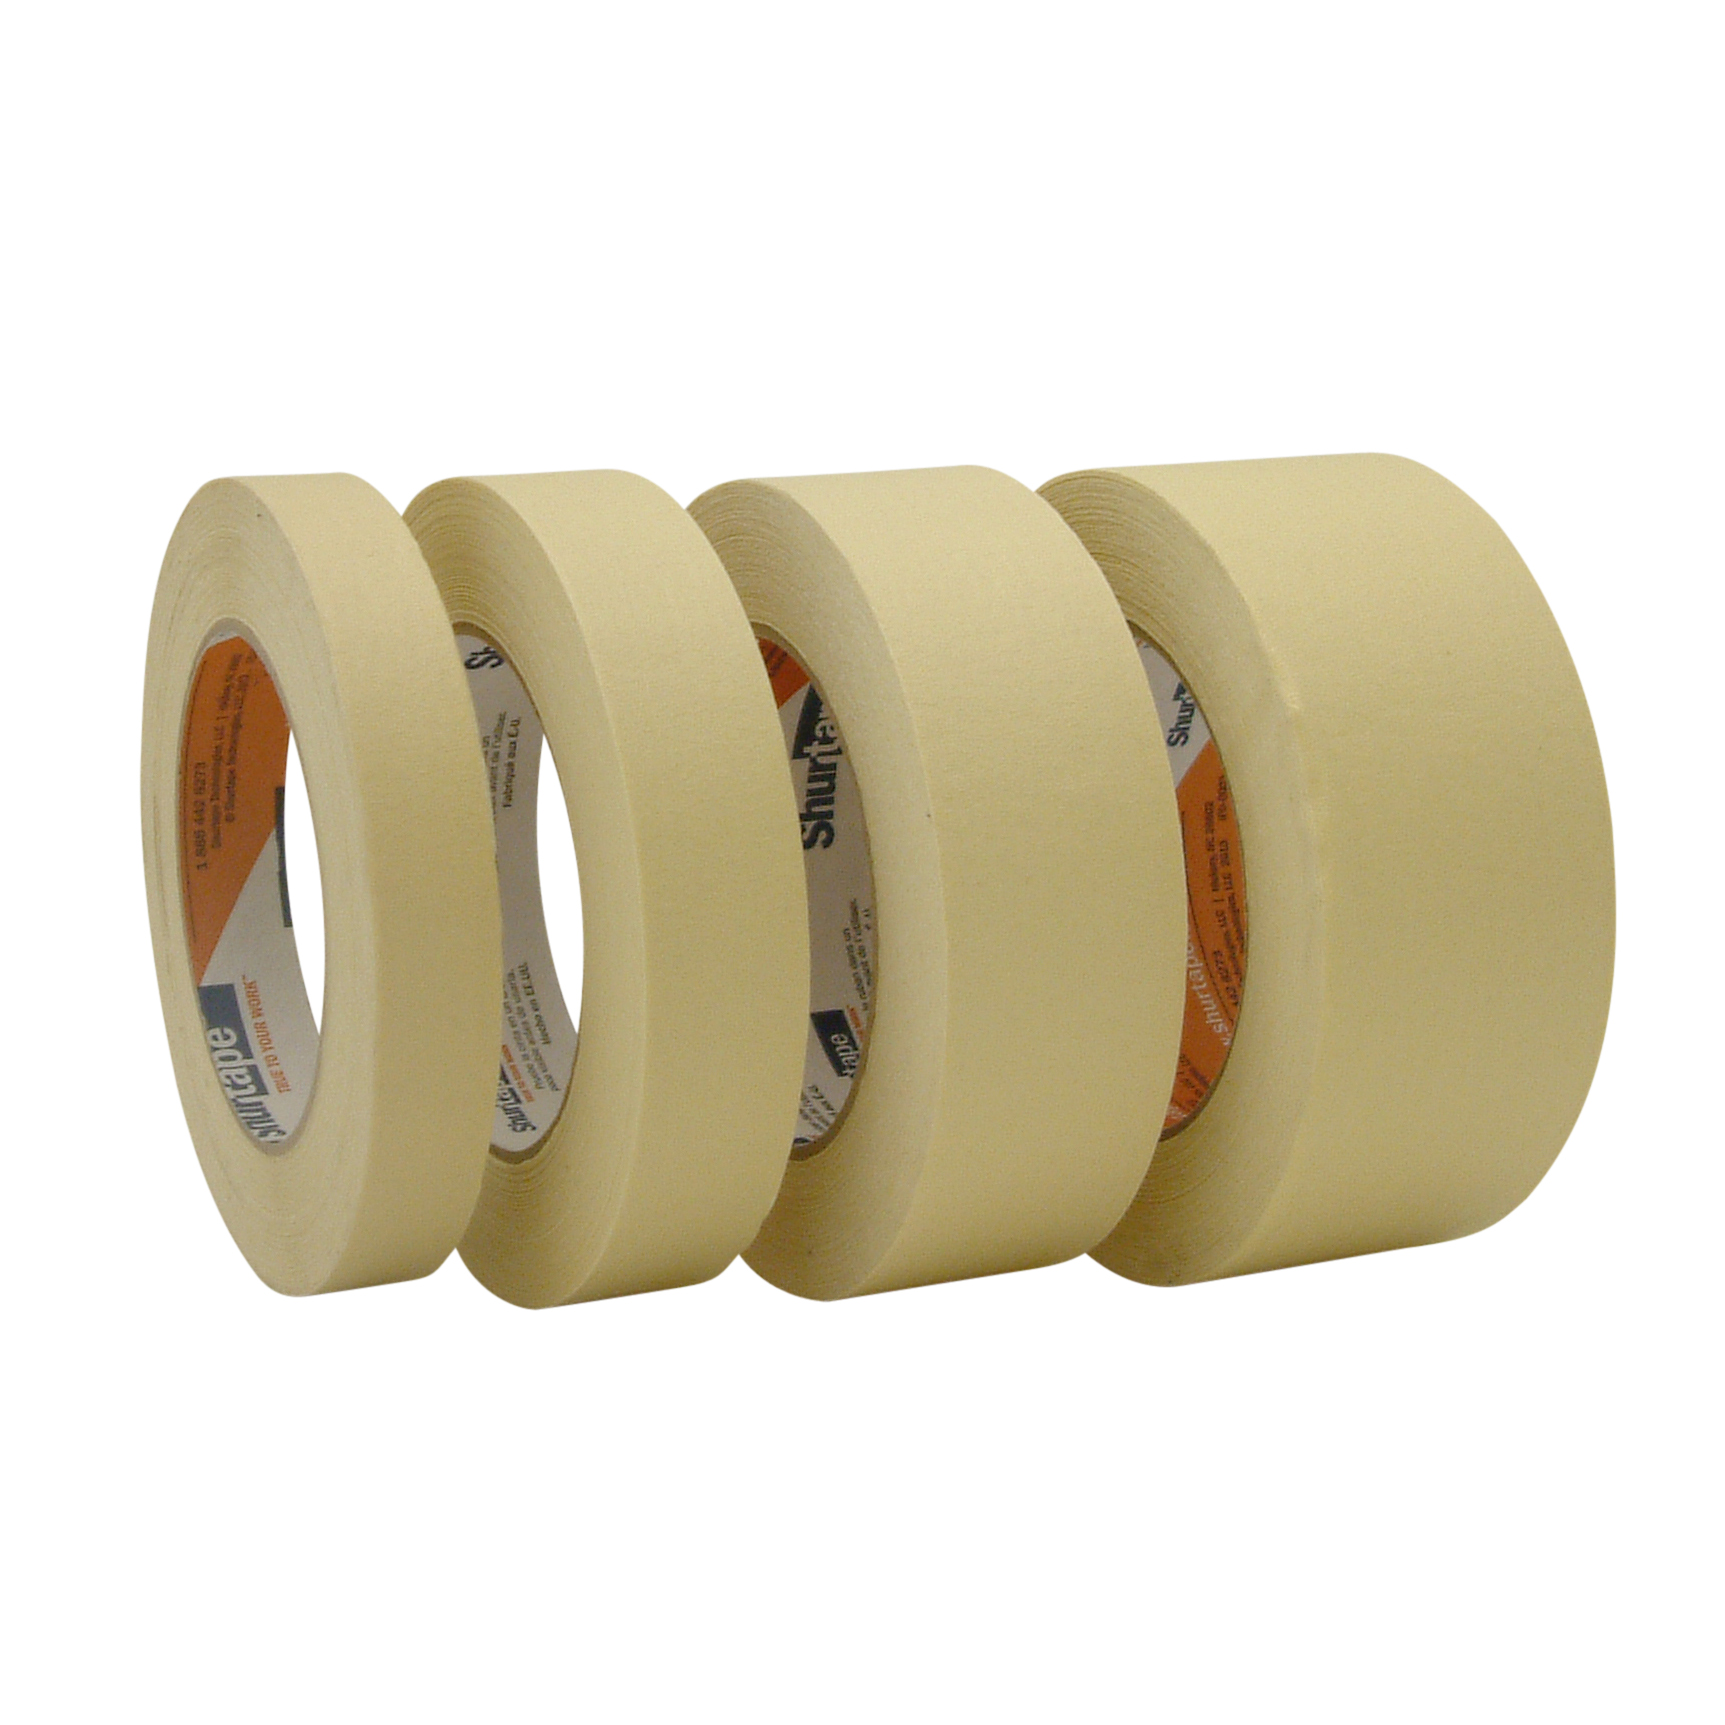 Shurtape CP-102 Industrial Grade Crepe Paper Masking Tape